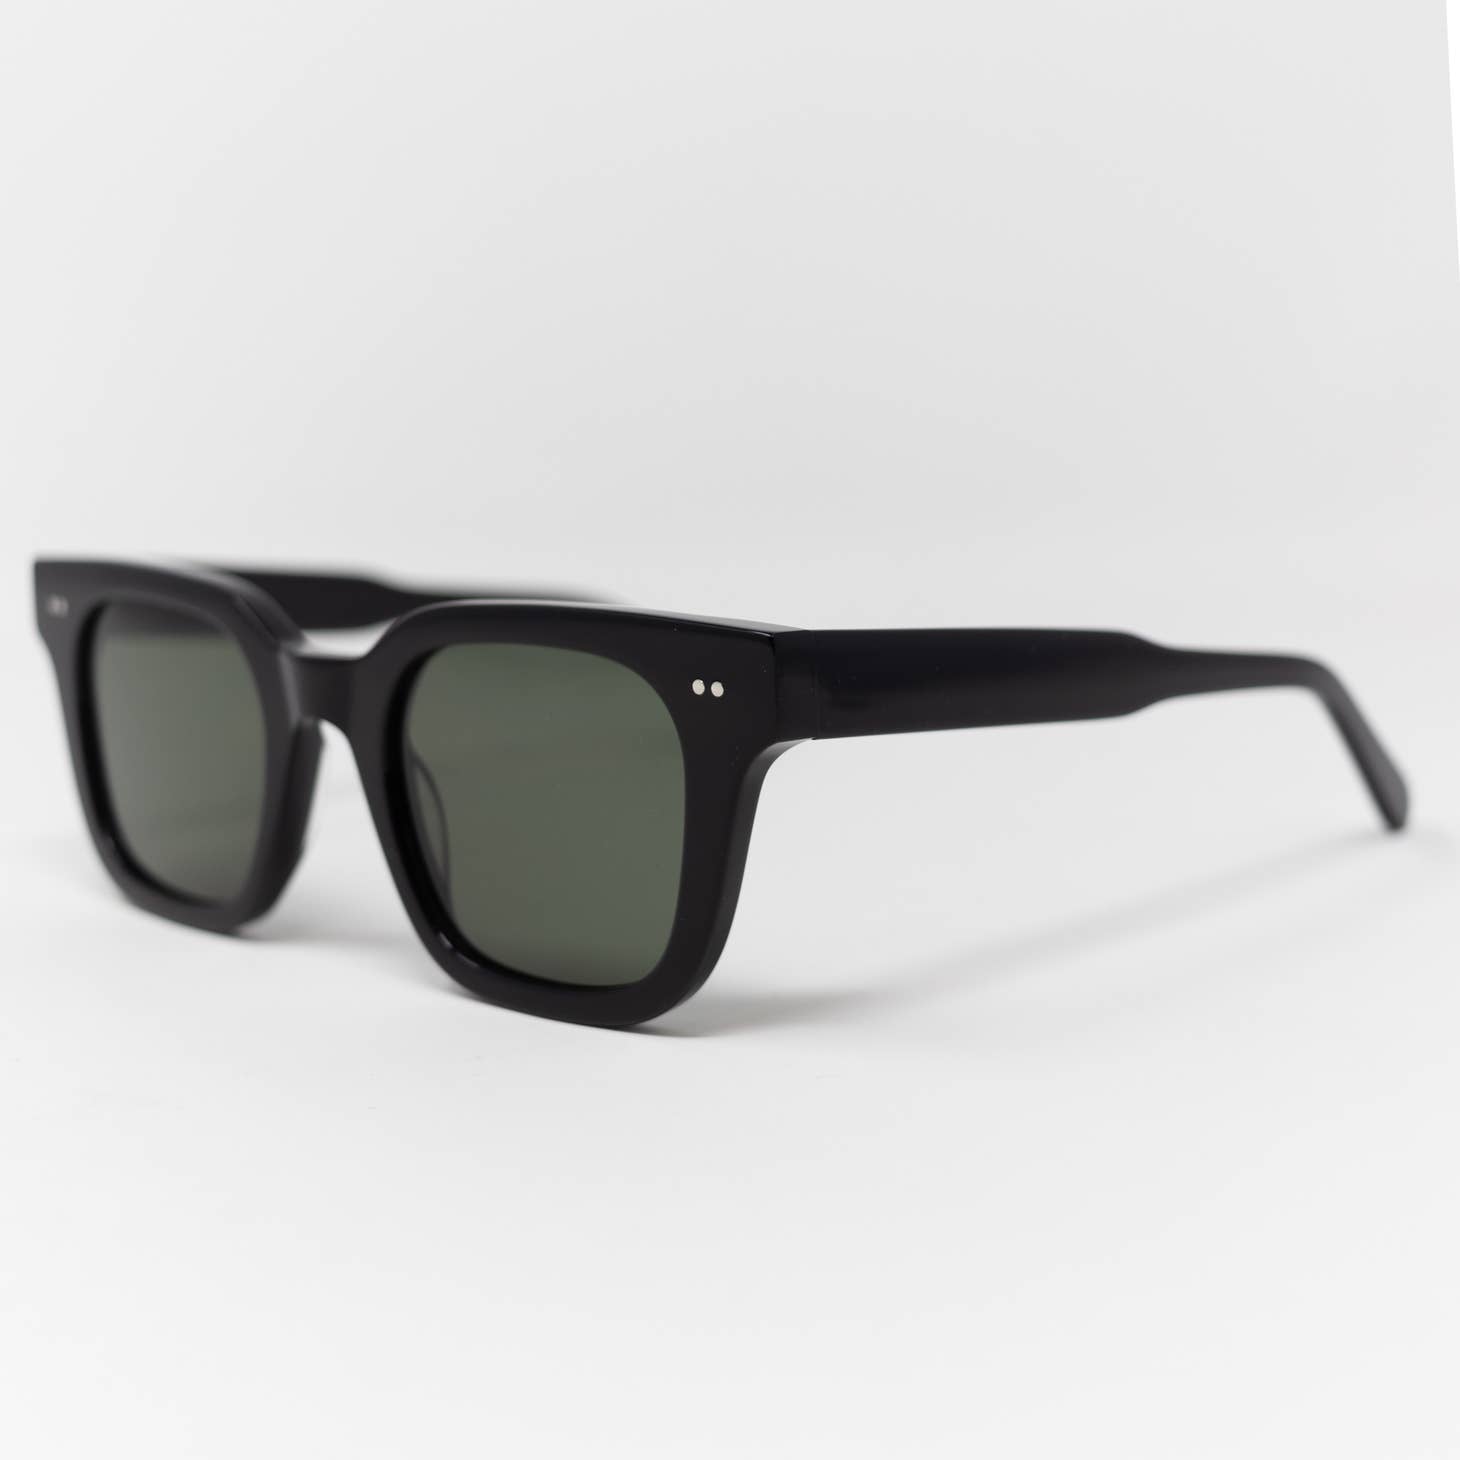 Grenada Sunglasses Black